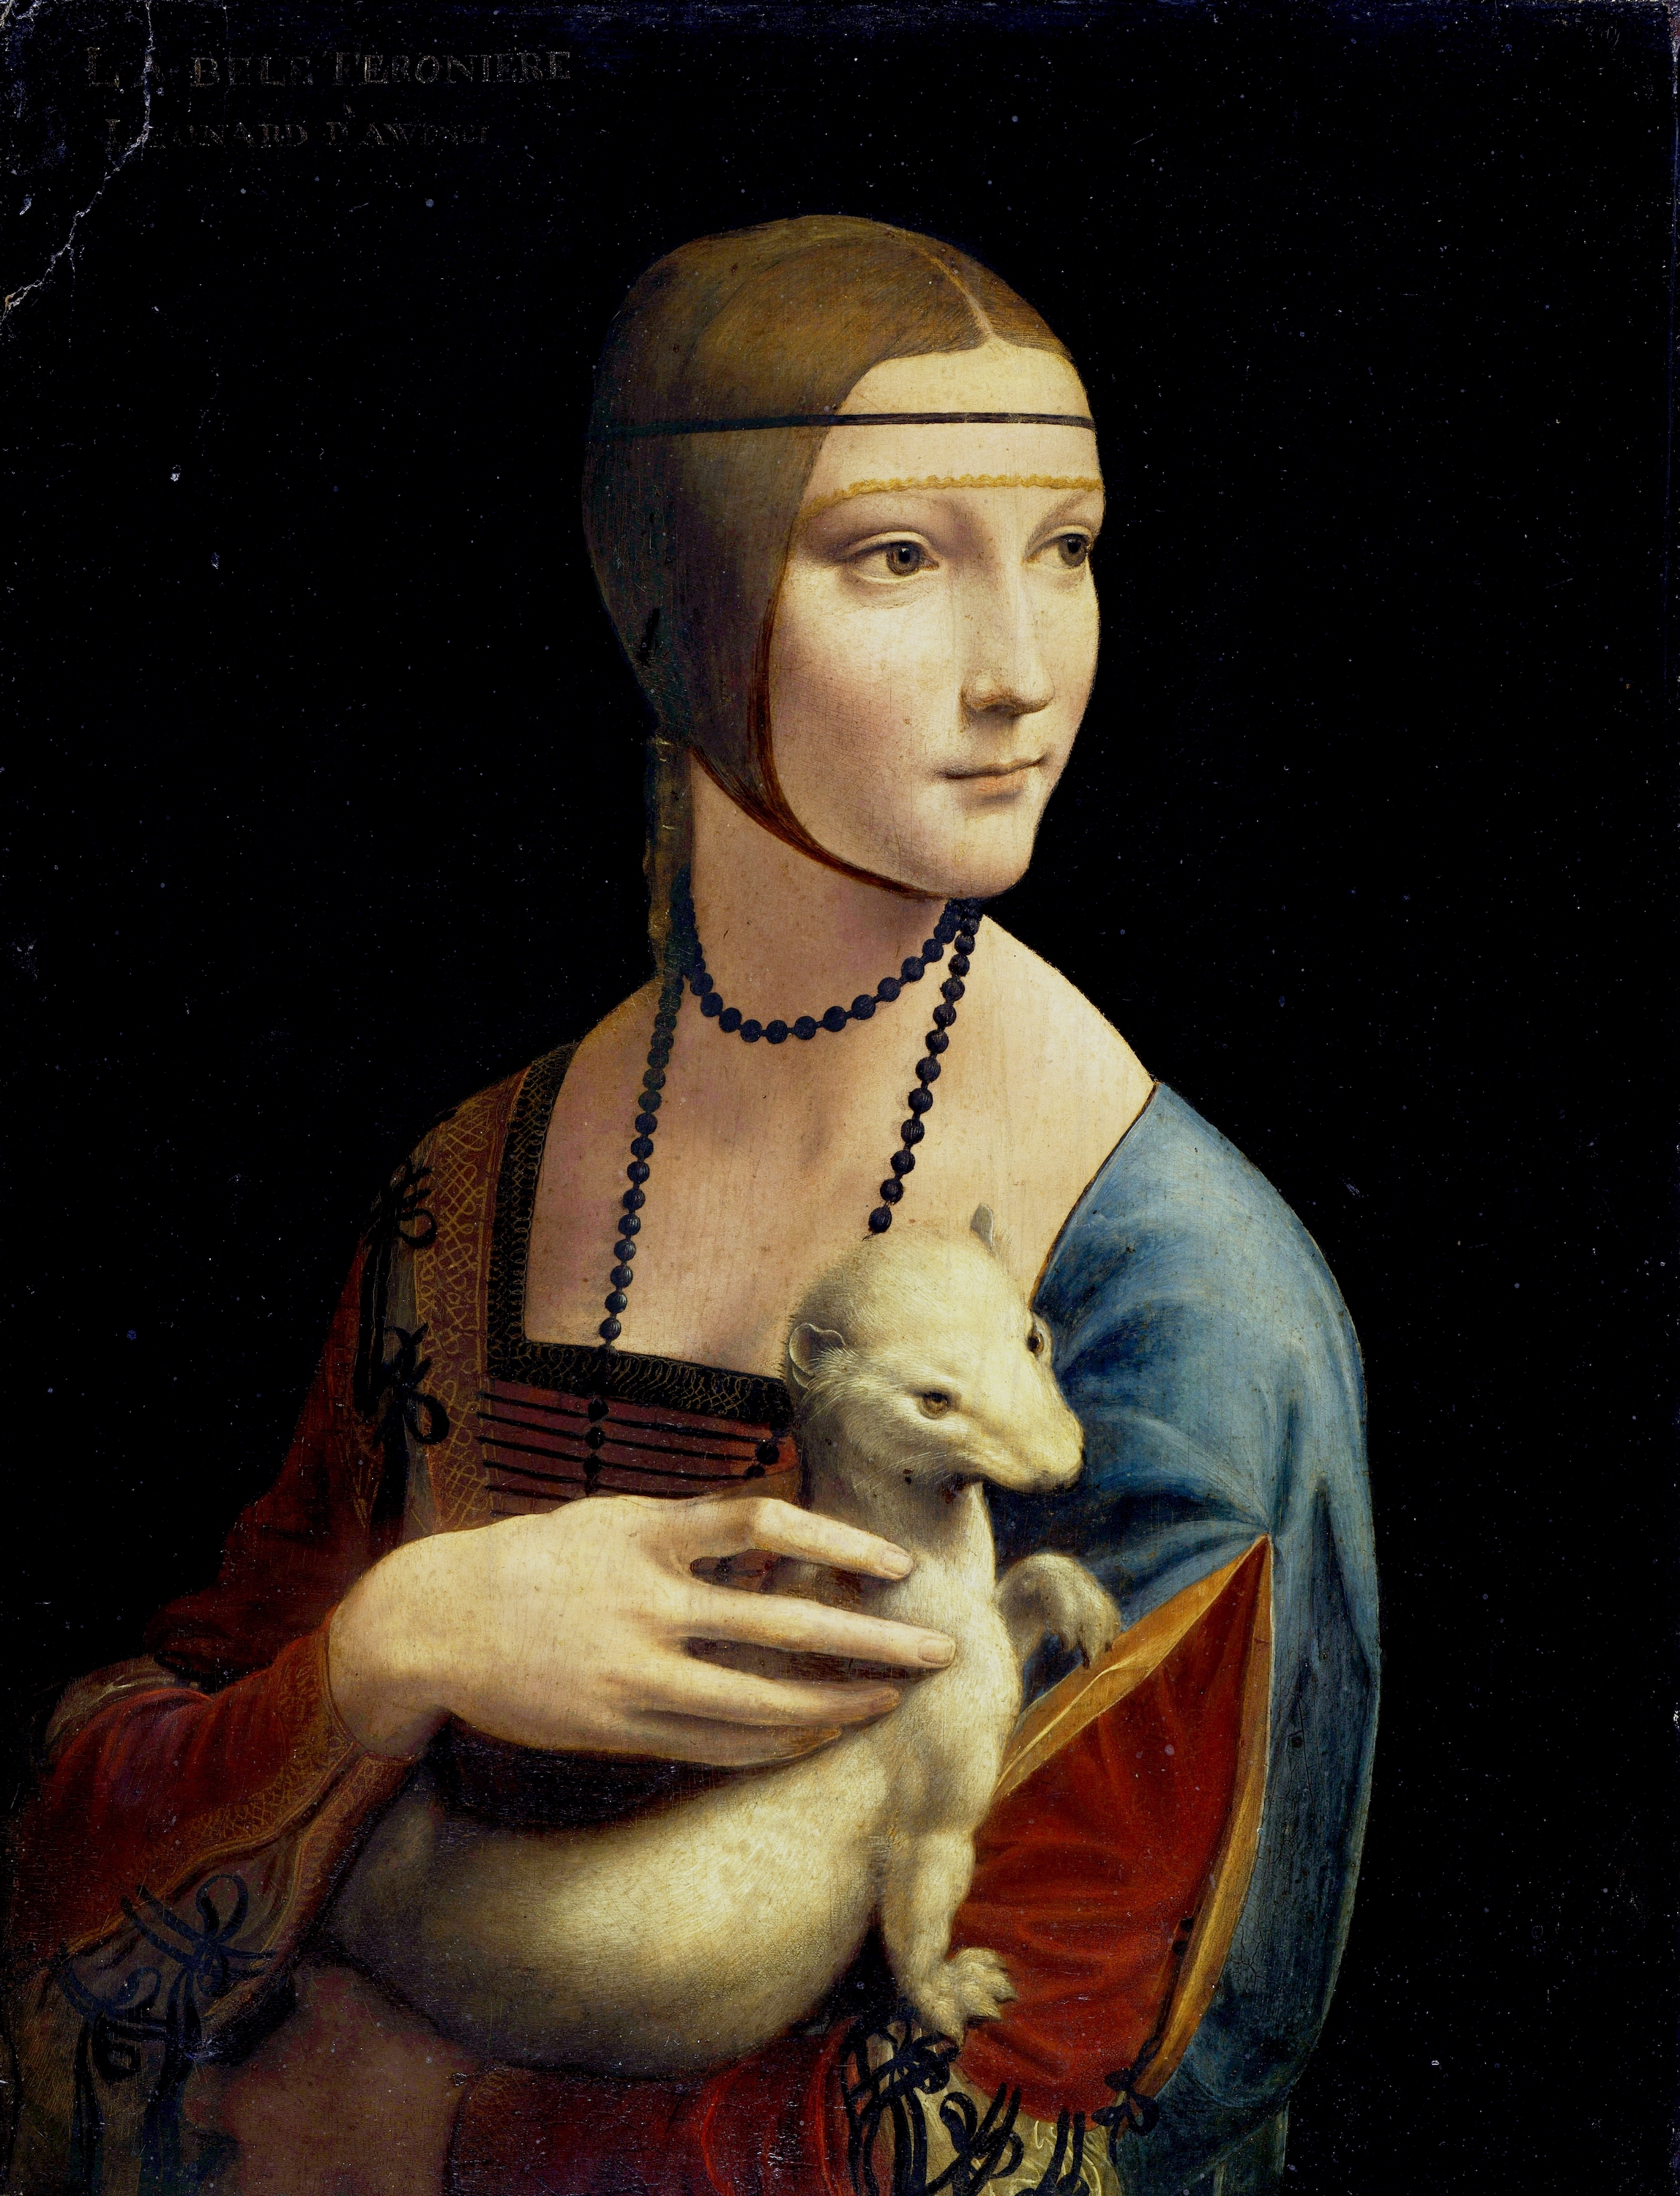 Lady with the Ermine by Leonardo da Vinci - 1489–90 - 54 cm × 39 cm National Museum in Krakow